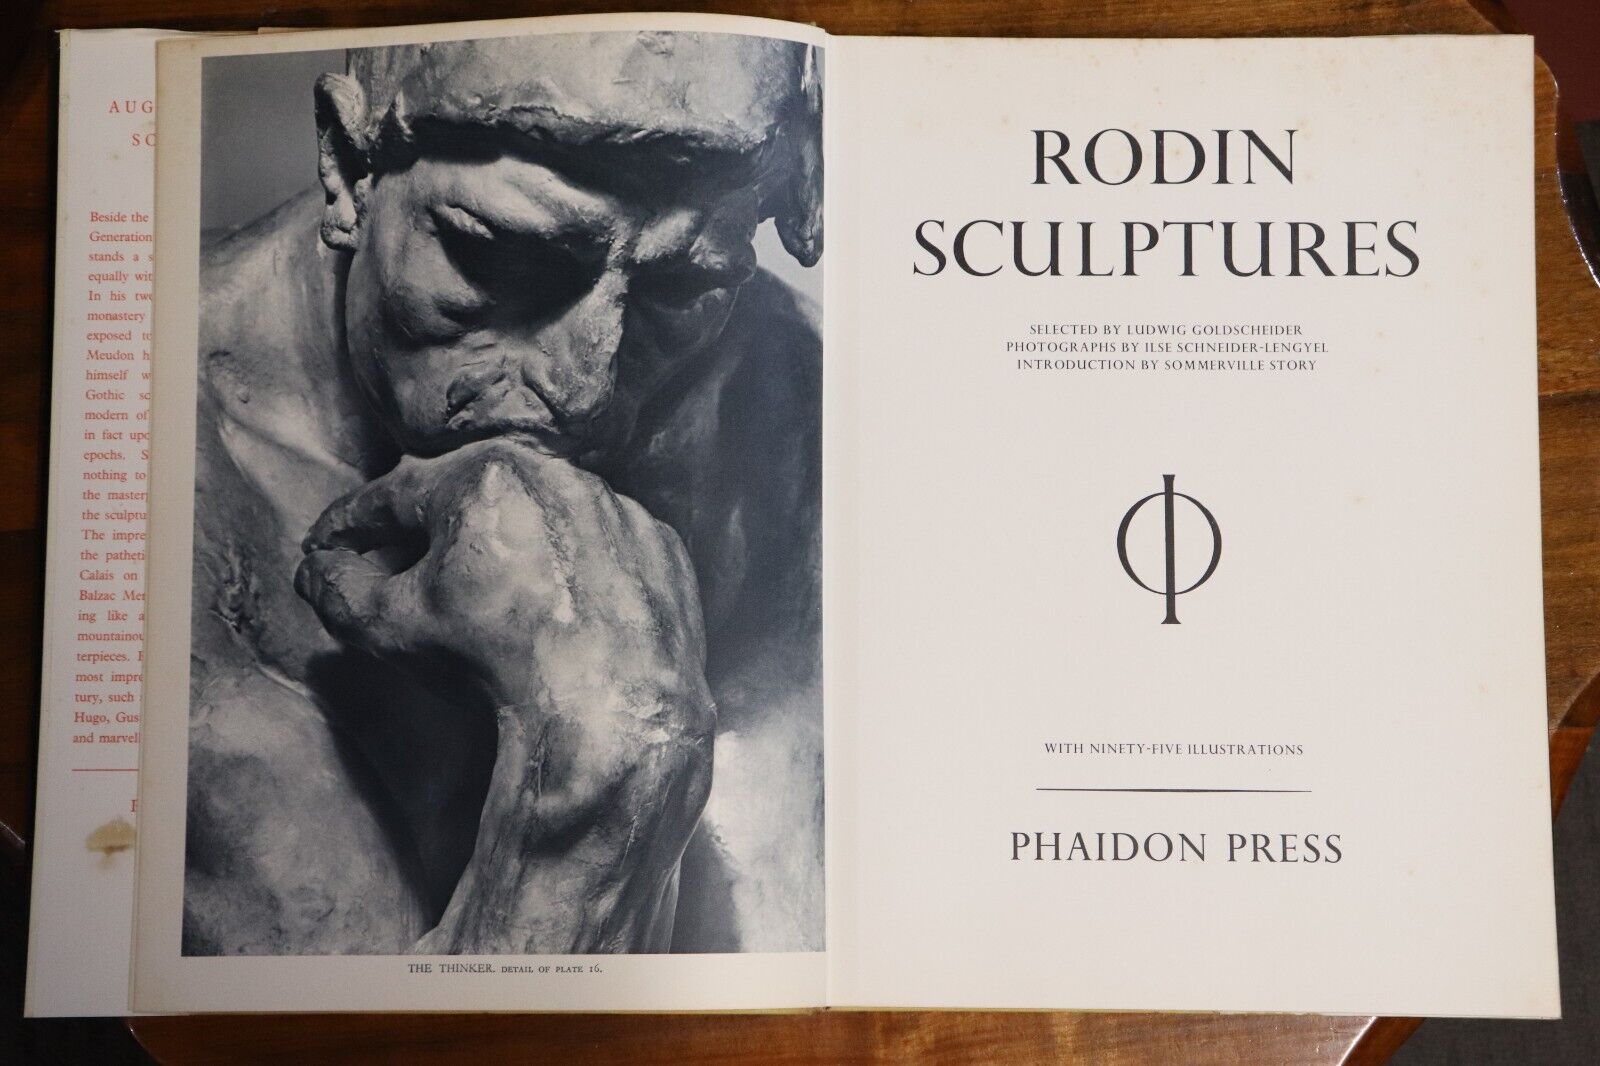 Rodin Sculptures by L Goldscheider - 1964 - 1st Edition French Artist Book - 0